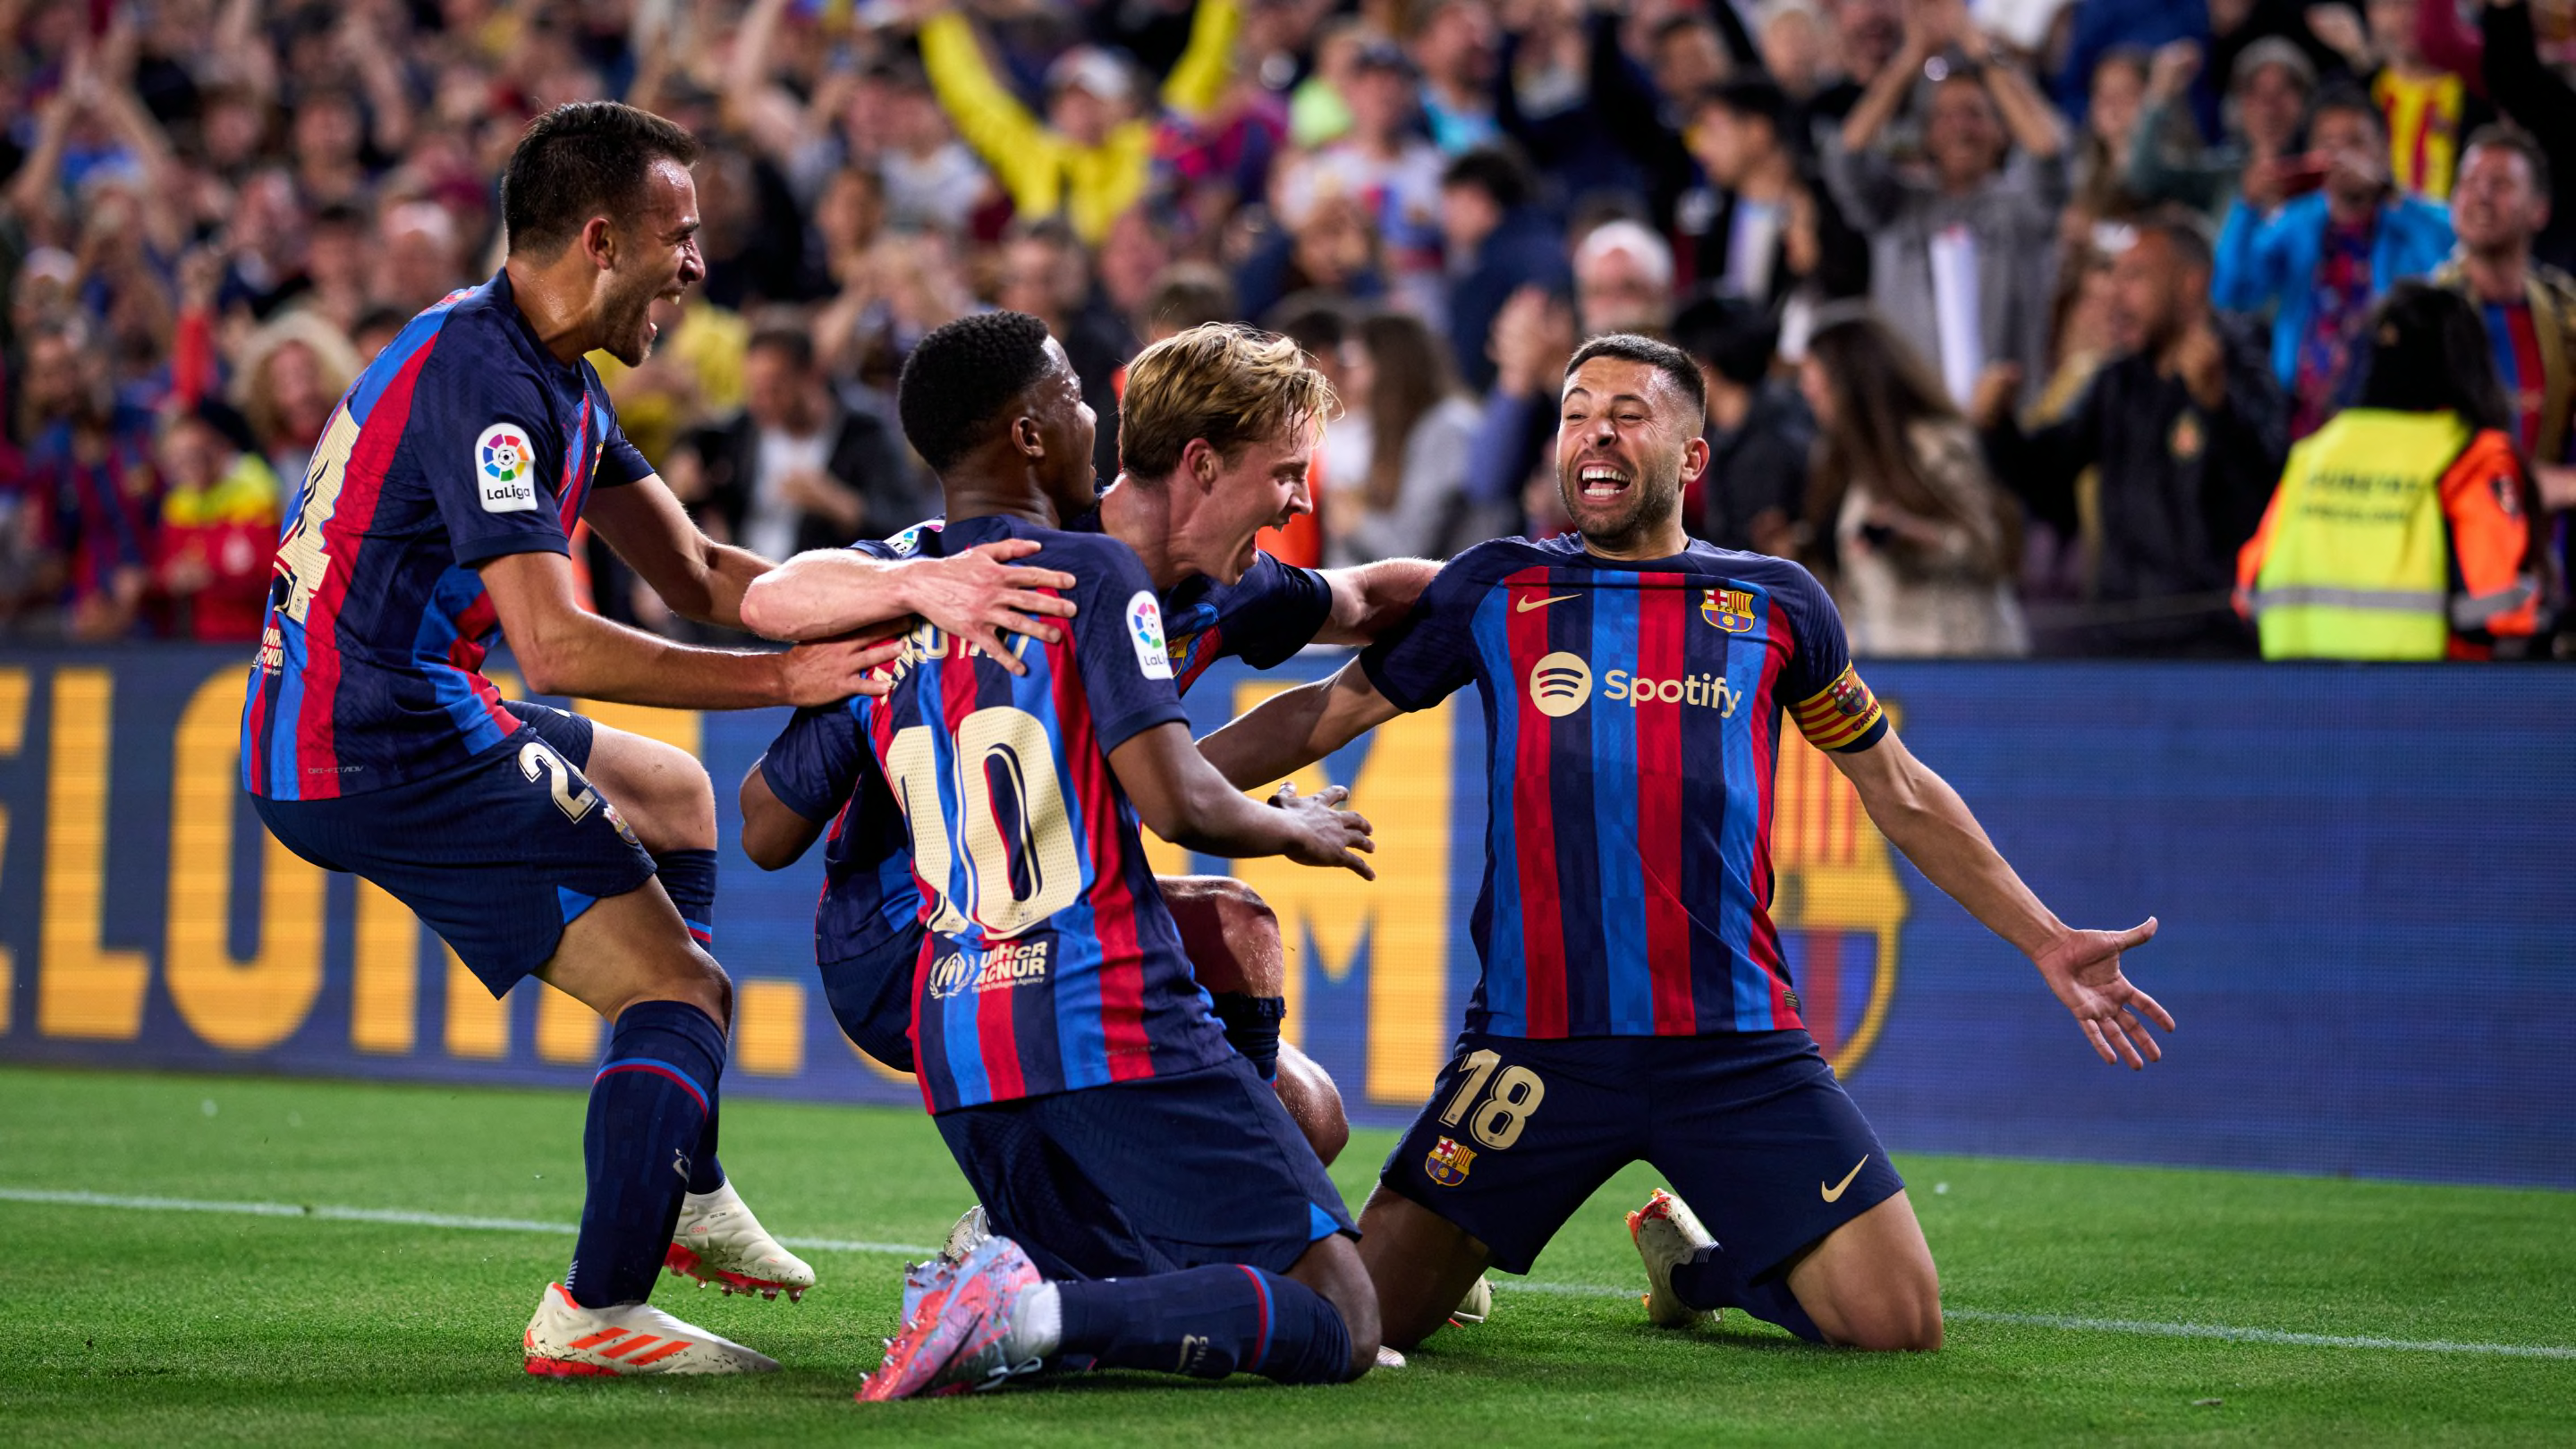 Photo of 90 MIN 🔵 PSG buscará el fichaje de un jugador del Barcelona para acompañar a Mbappé en ataque